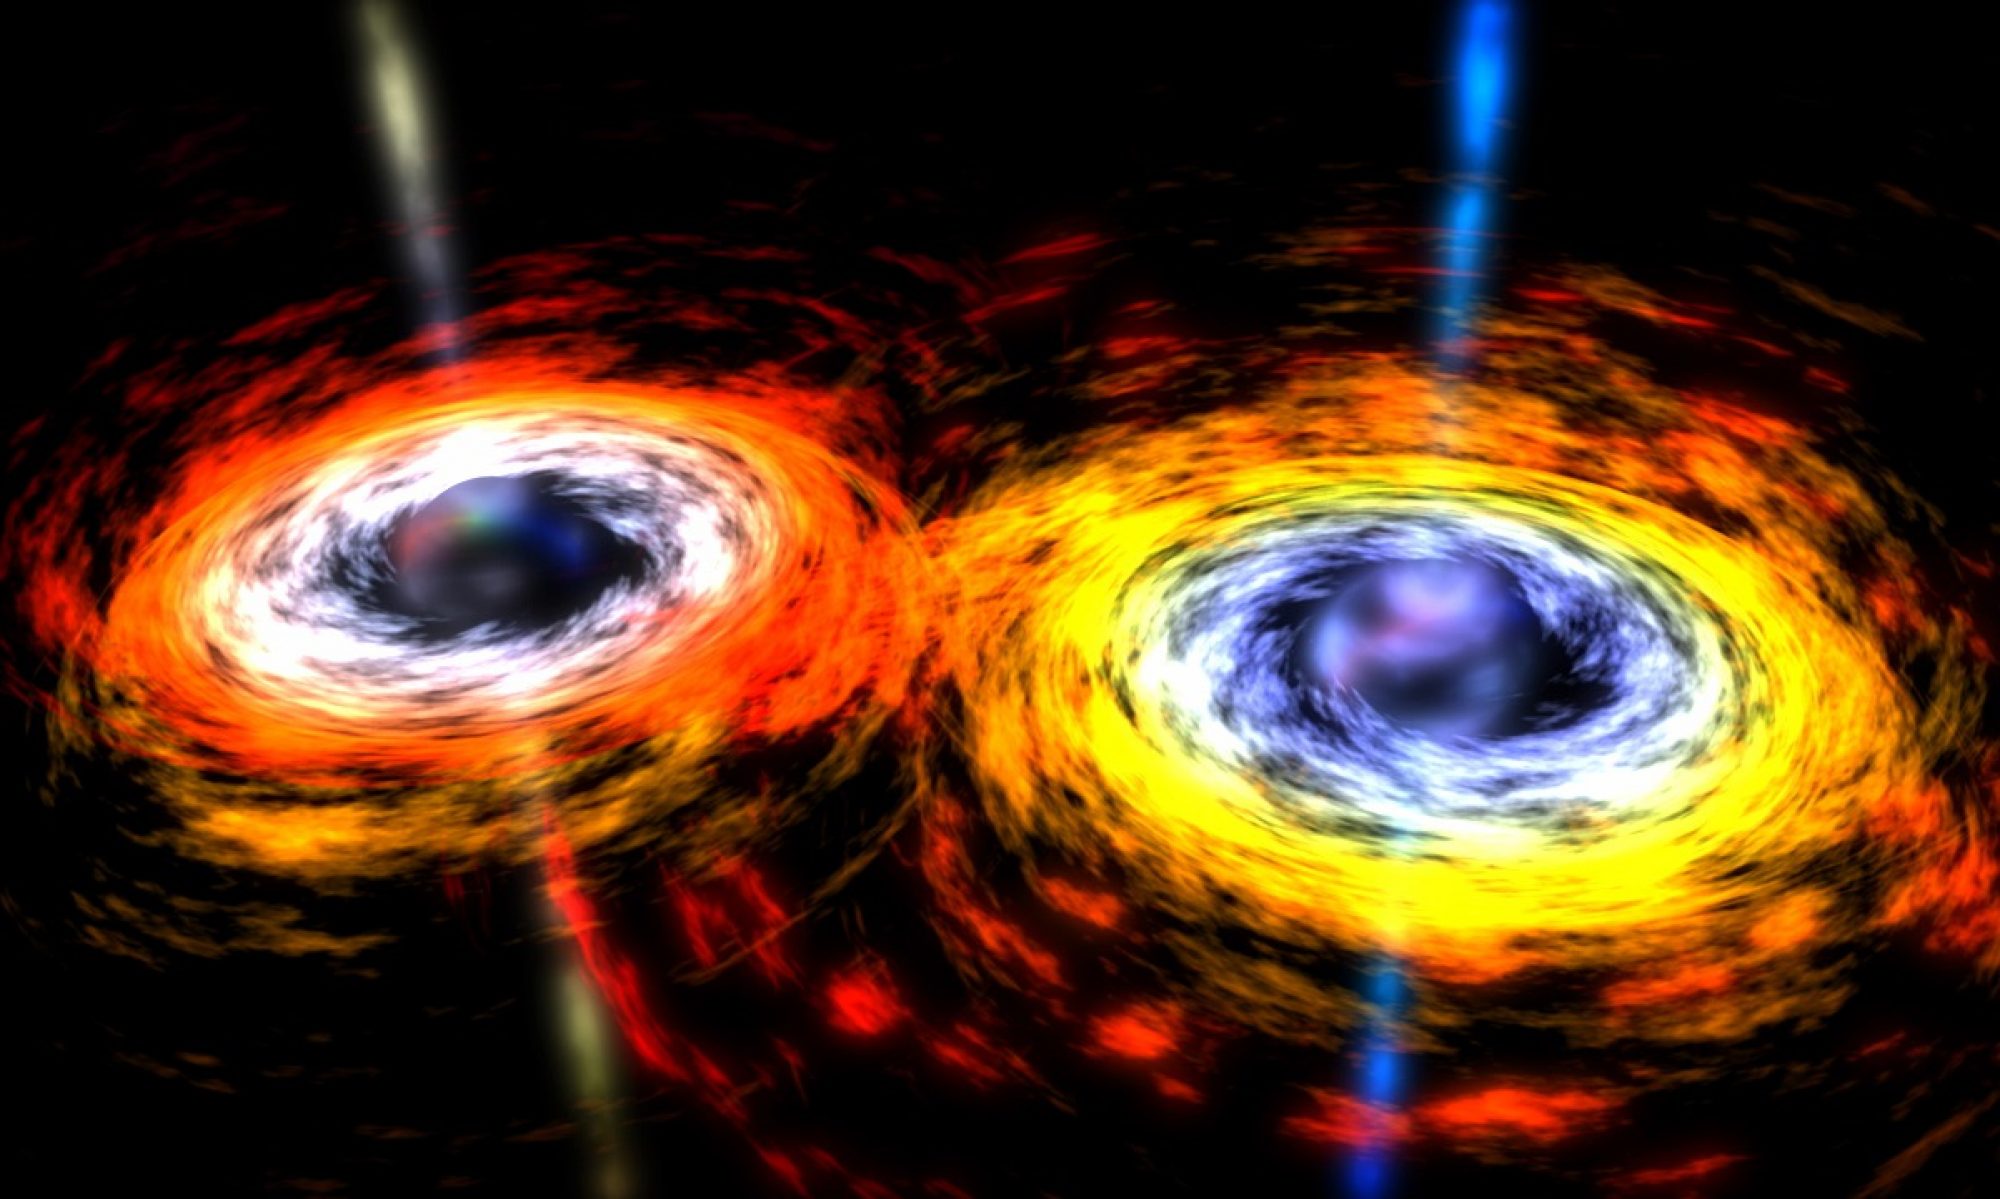 nasa black hole quasar